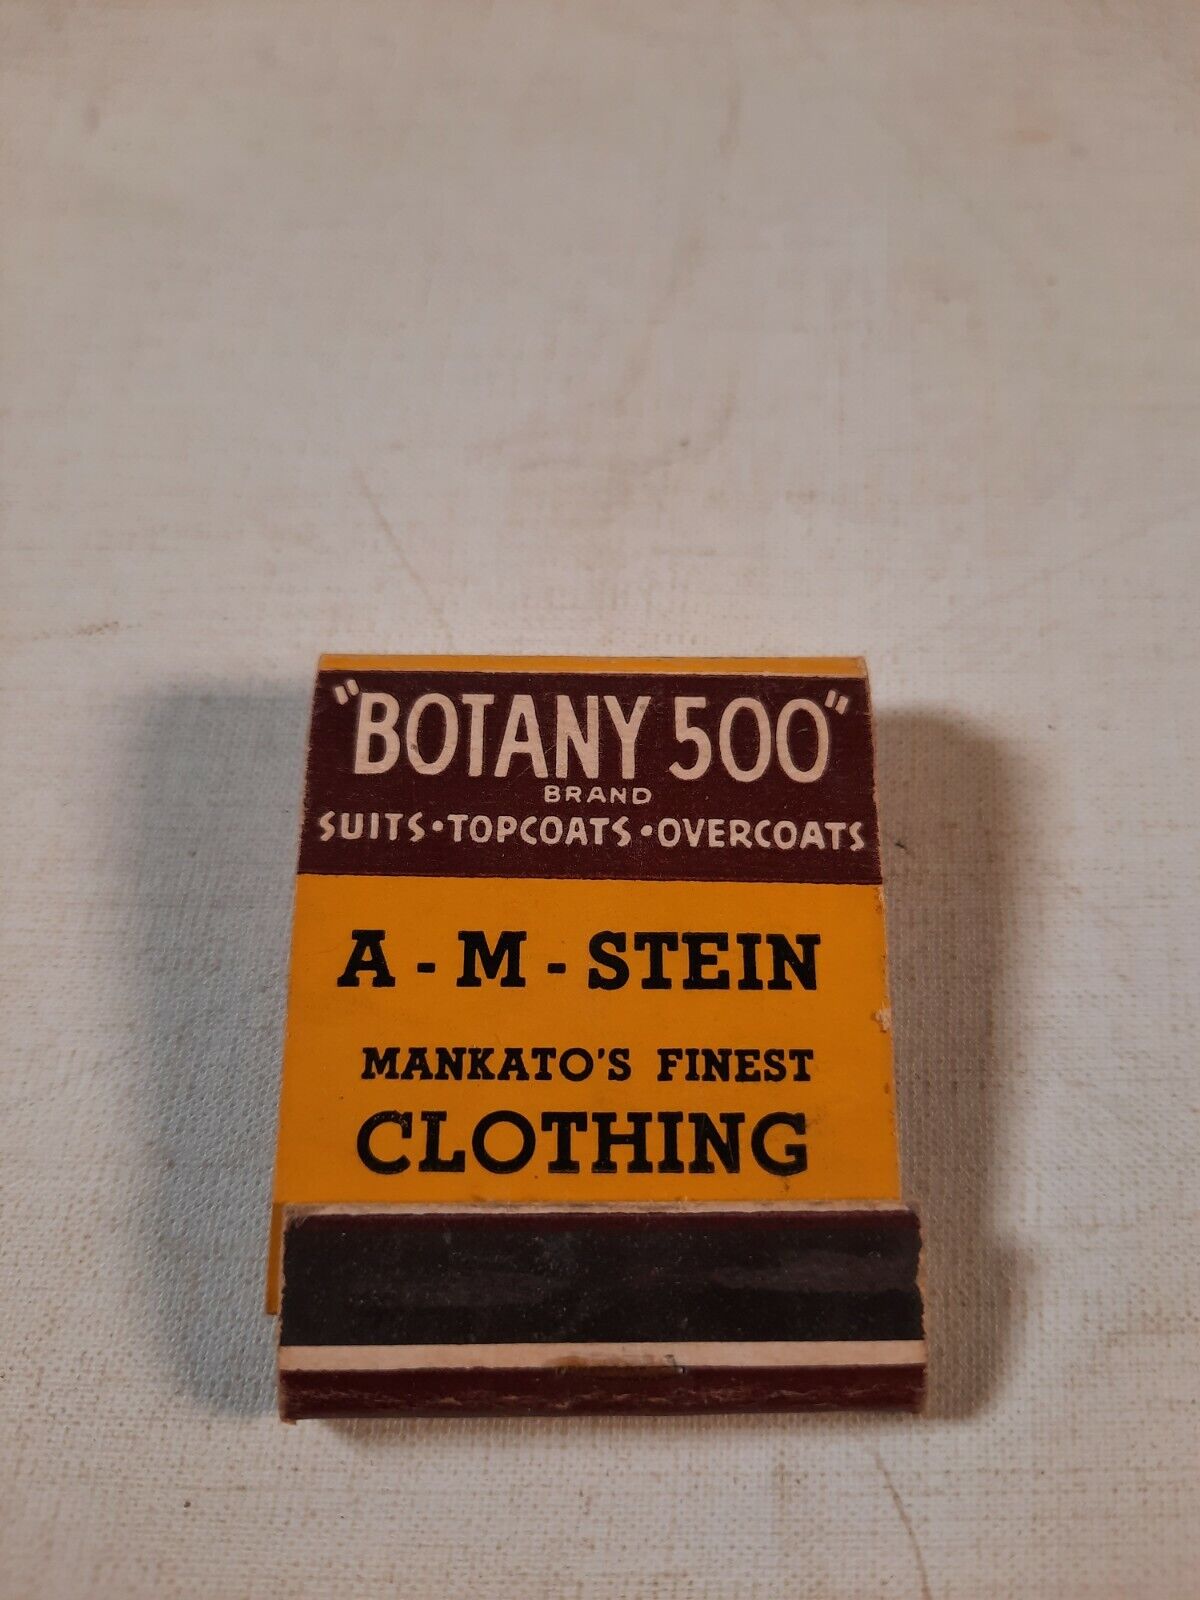 Vtg botany 500 suits topcoats a - m stein mankato Minnesota matchbook not full